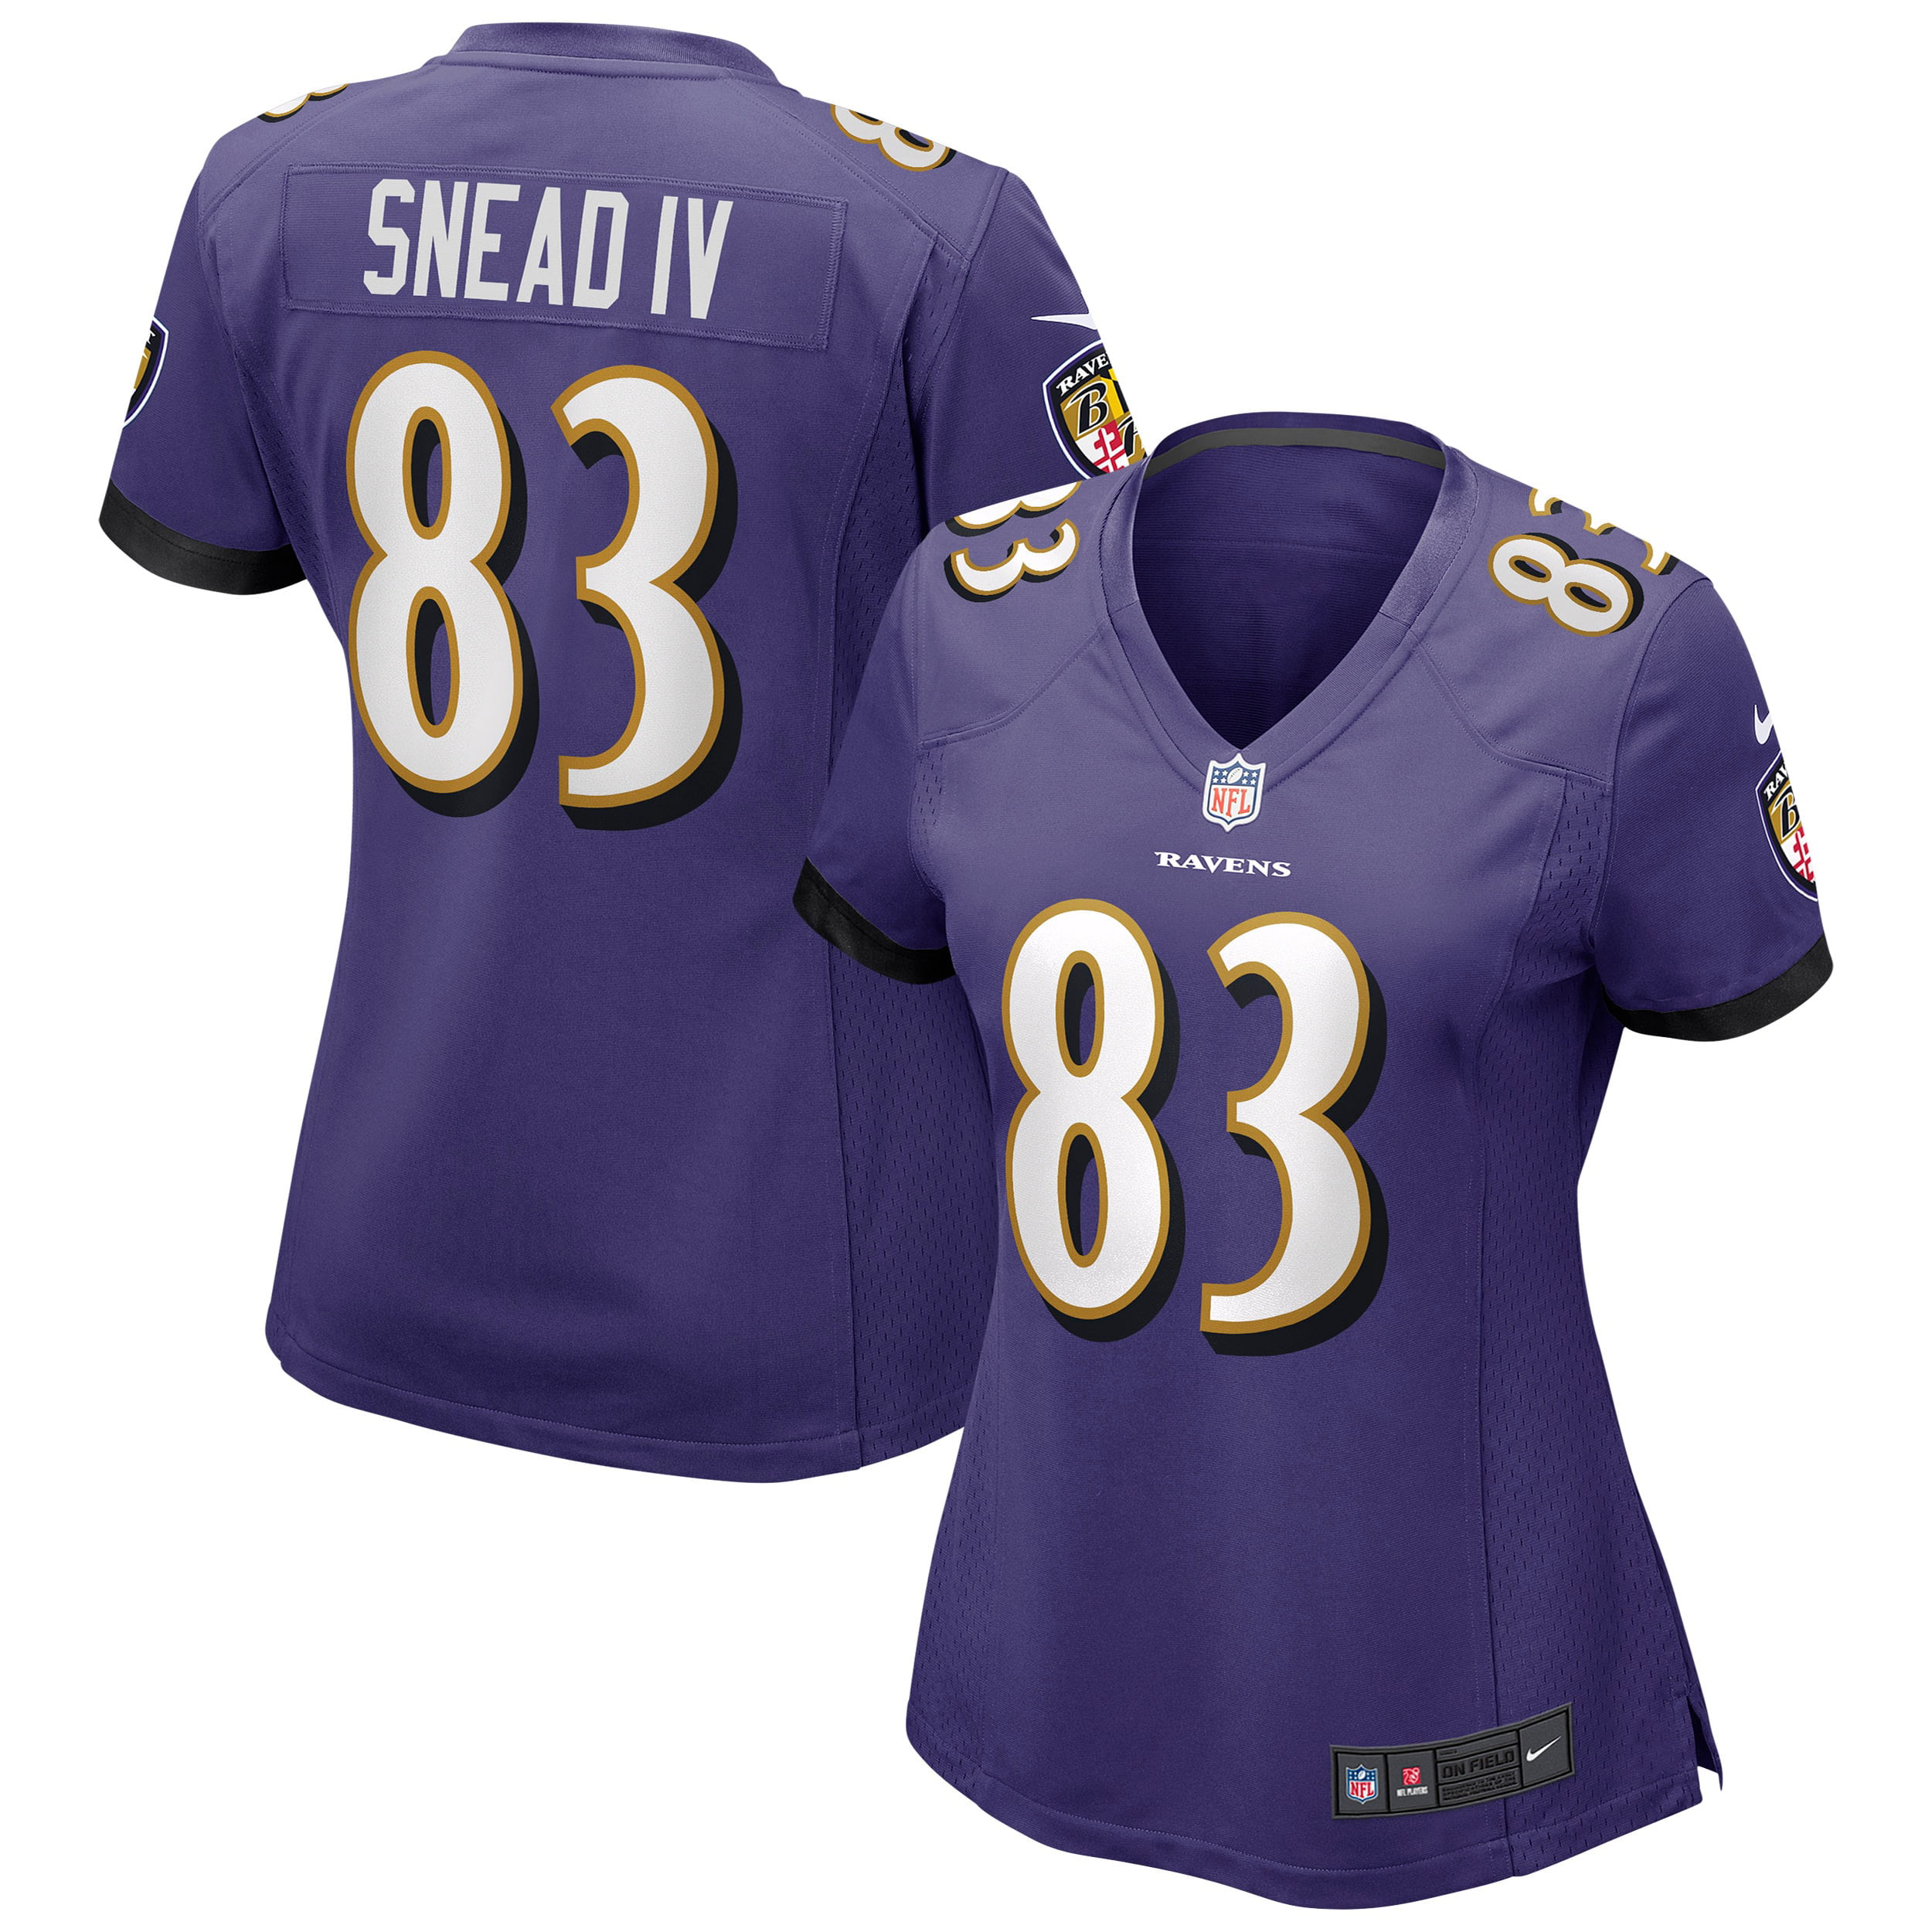 Willie Snead IV Baltimore Ravens Nike Women's Game Jersey - Purple - Walmart.com